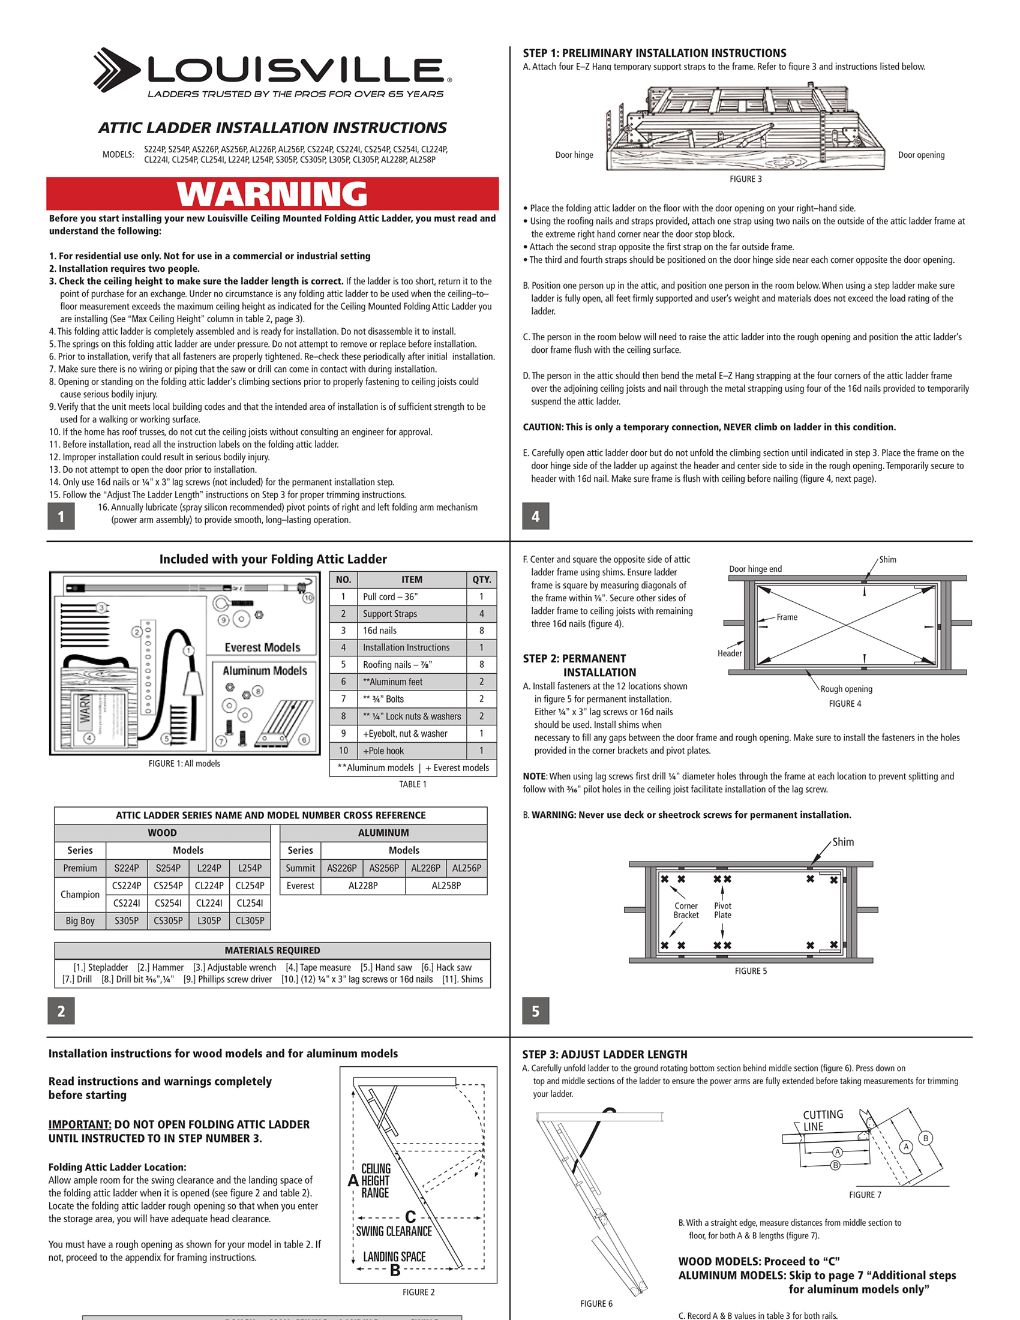 AL228P and AL258P Attic Ladders Installation Instructions Marketing Material Image